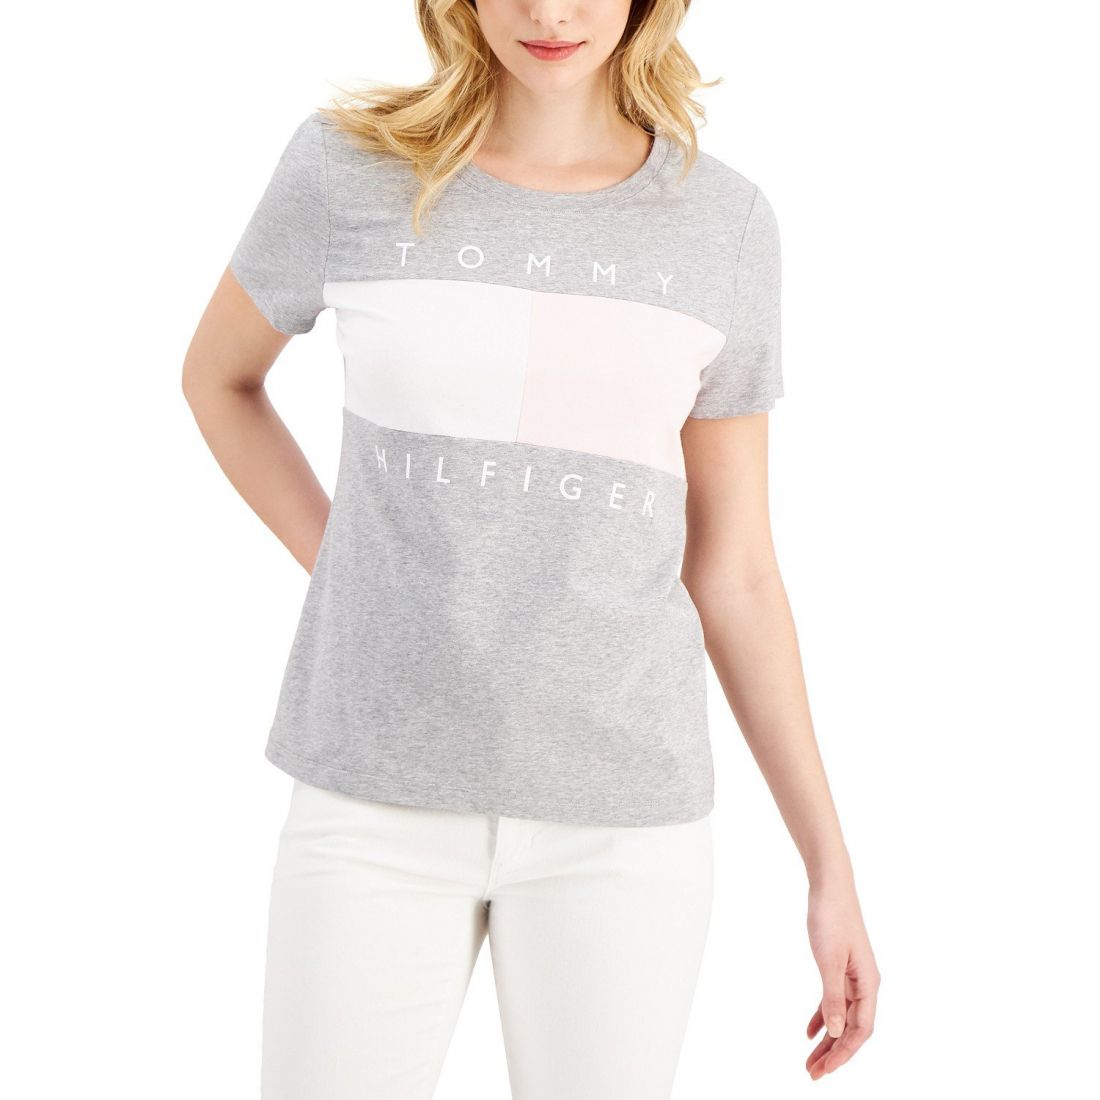 Tommy Hilfiger - T-shirt 'Big Flag' pour Femmes